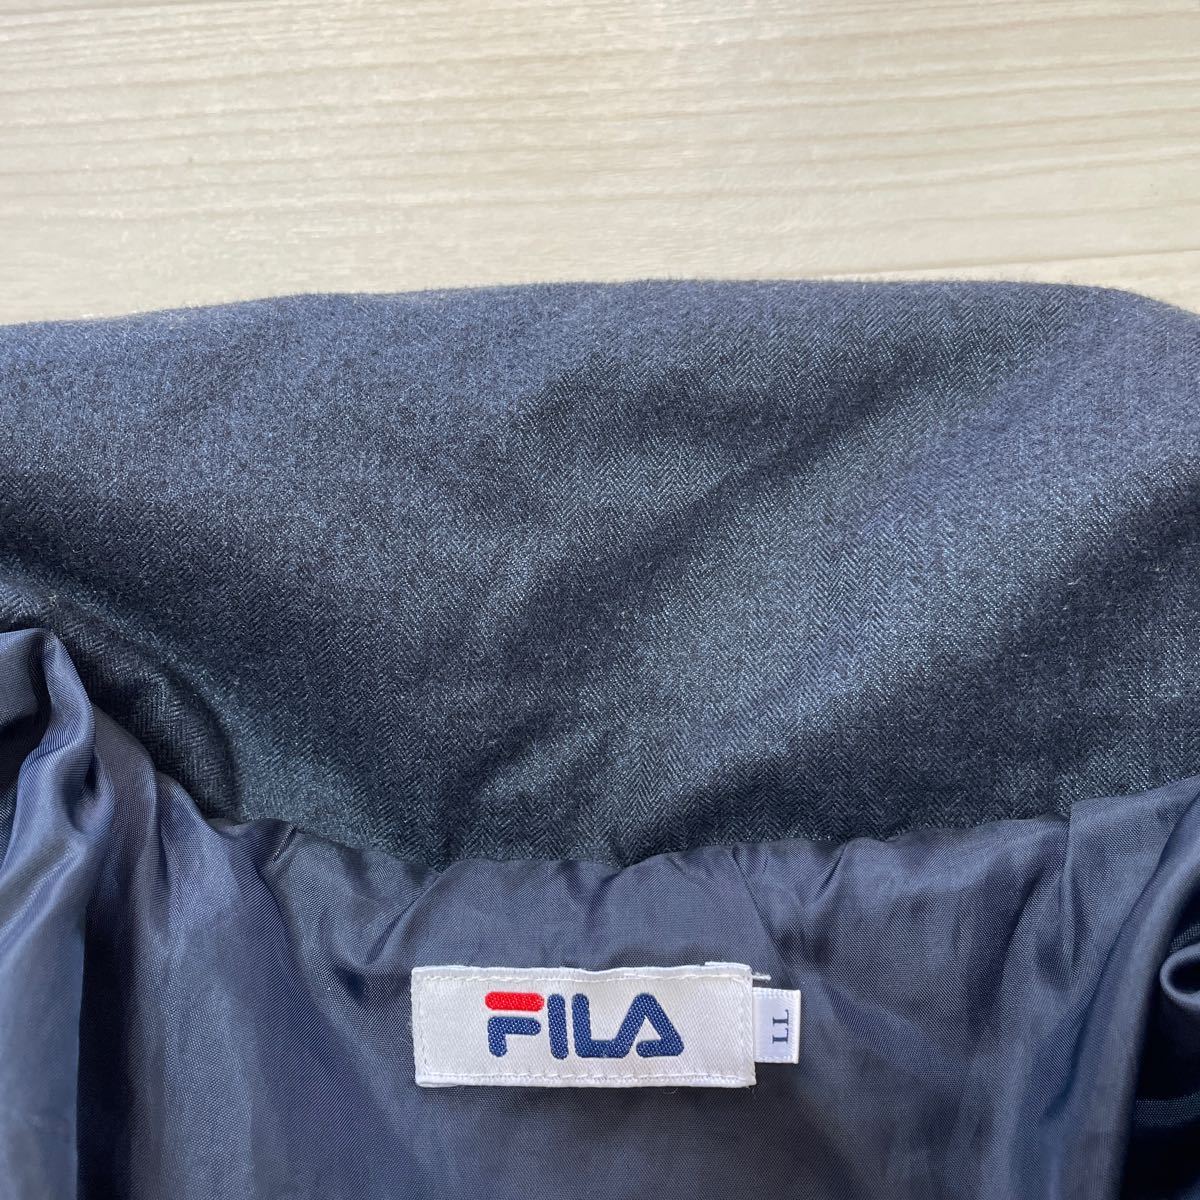 FILA filler с хлопком пальто спорт одежда защищающий от холода темно-синий Golf одежда женский размер LL